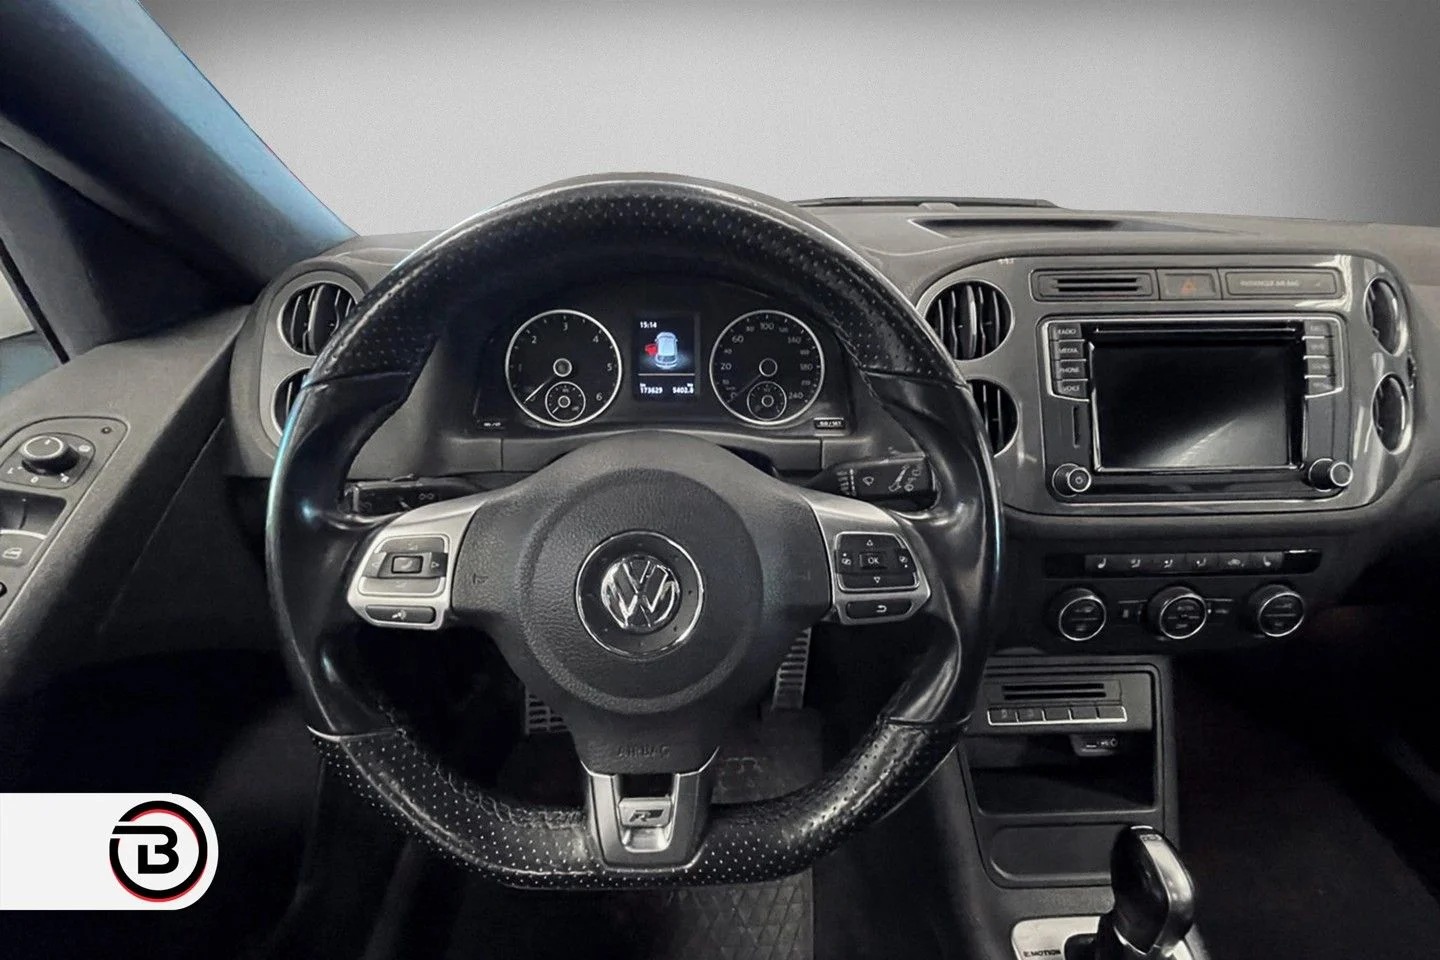 Volkswagen Tiguan 2.0 TDI 4Motion DSG Sekventiell, 184hk, 2016